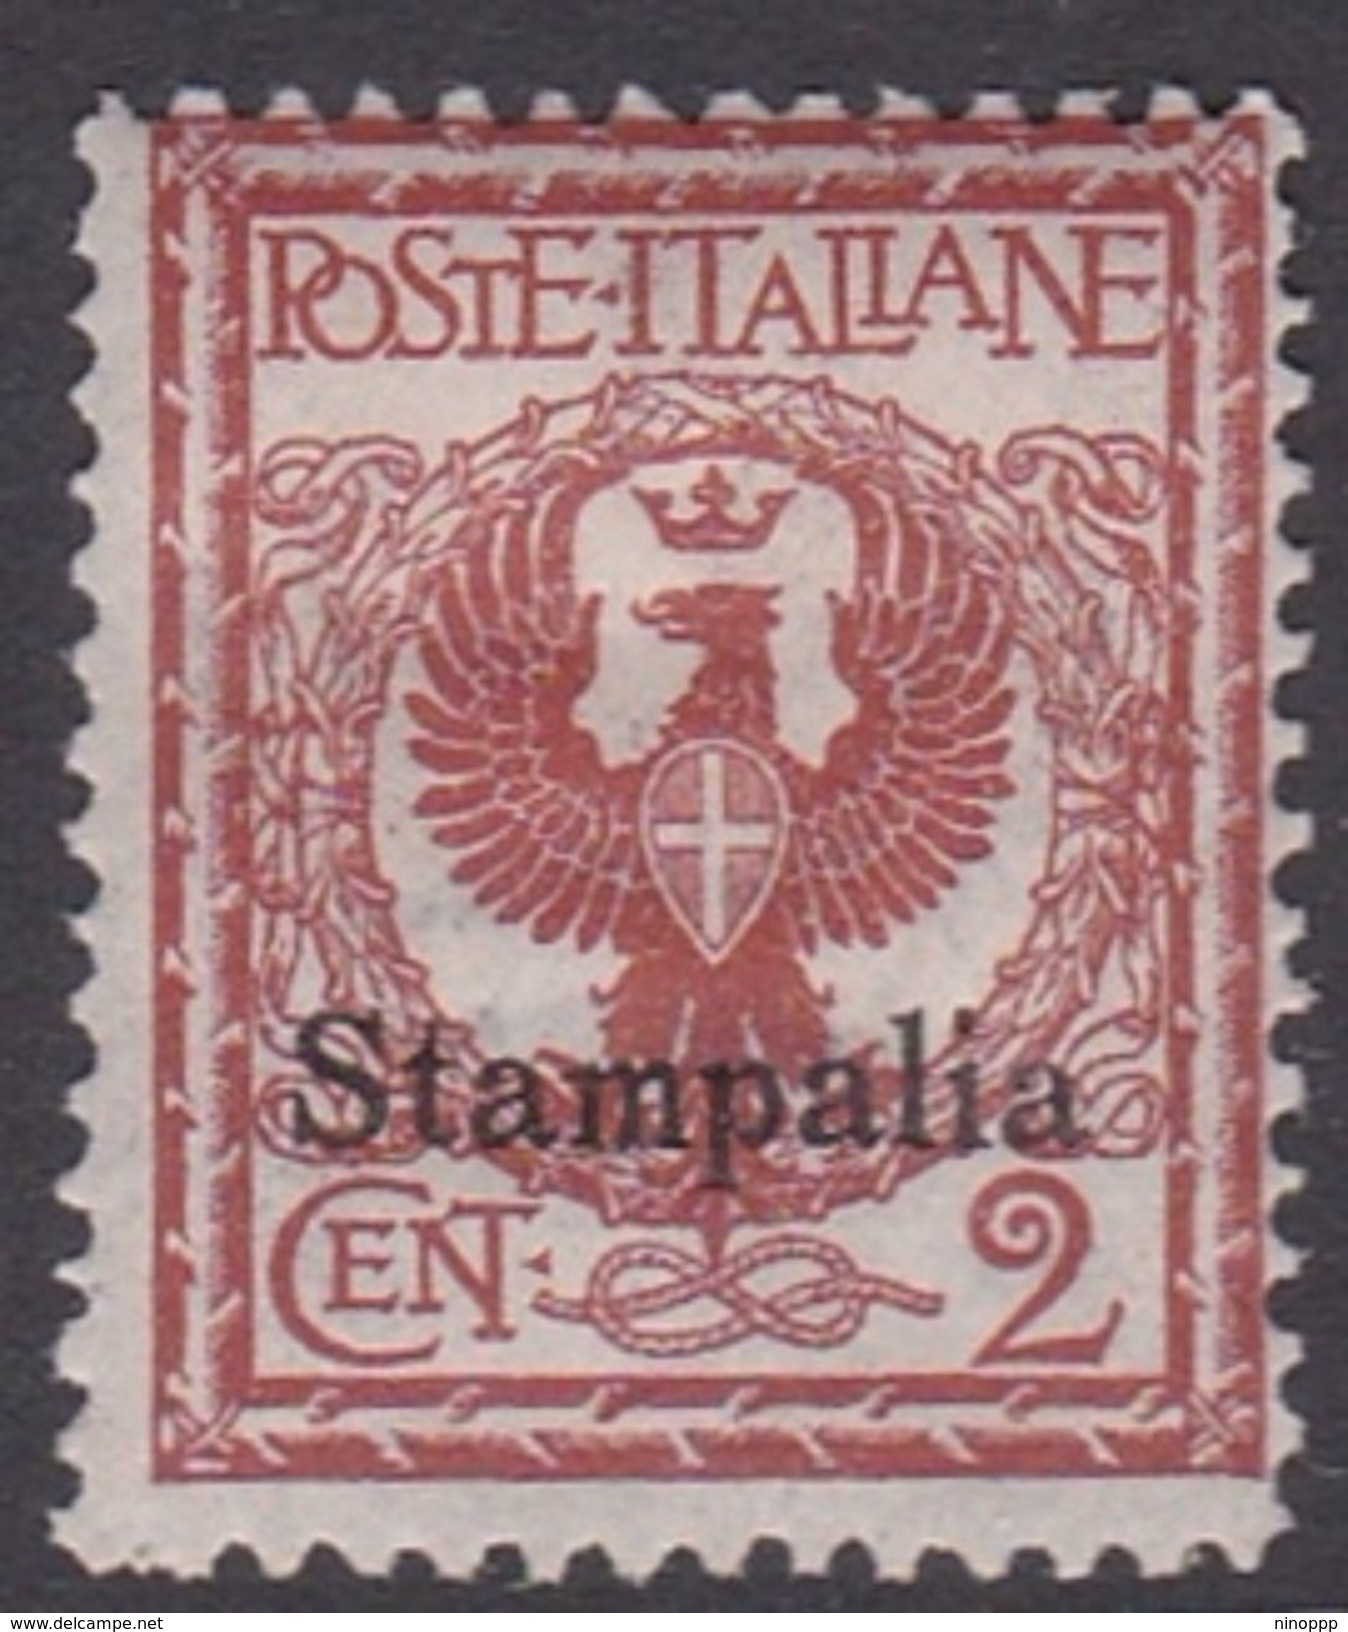 Italy-Colonies And Territories-Aegean-Stampalia S1 1912 2c Orange Brown MH - Aegean (Stampalia)